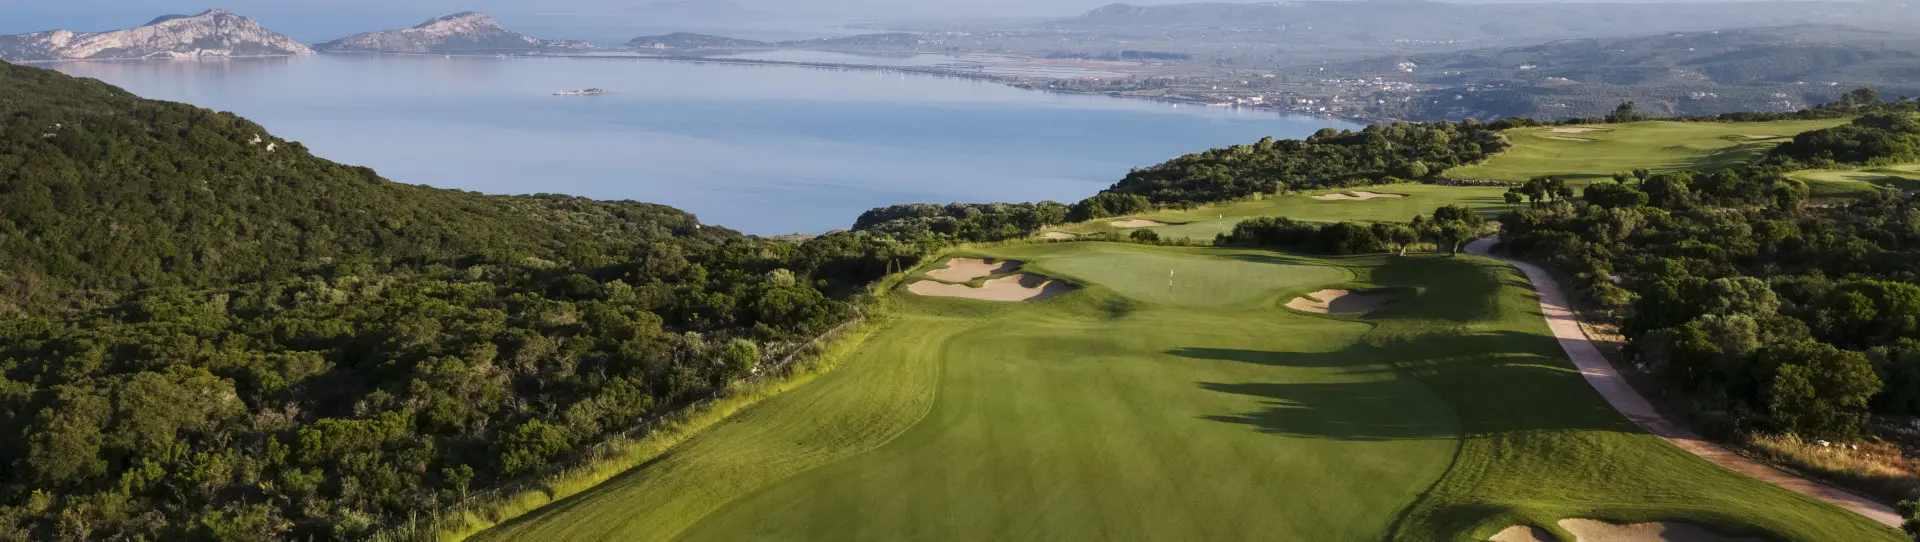 Greece golf courses - Navarino International Olympic Academy - Photo 1